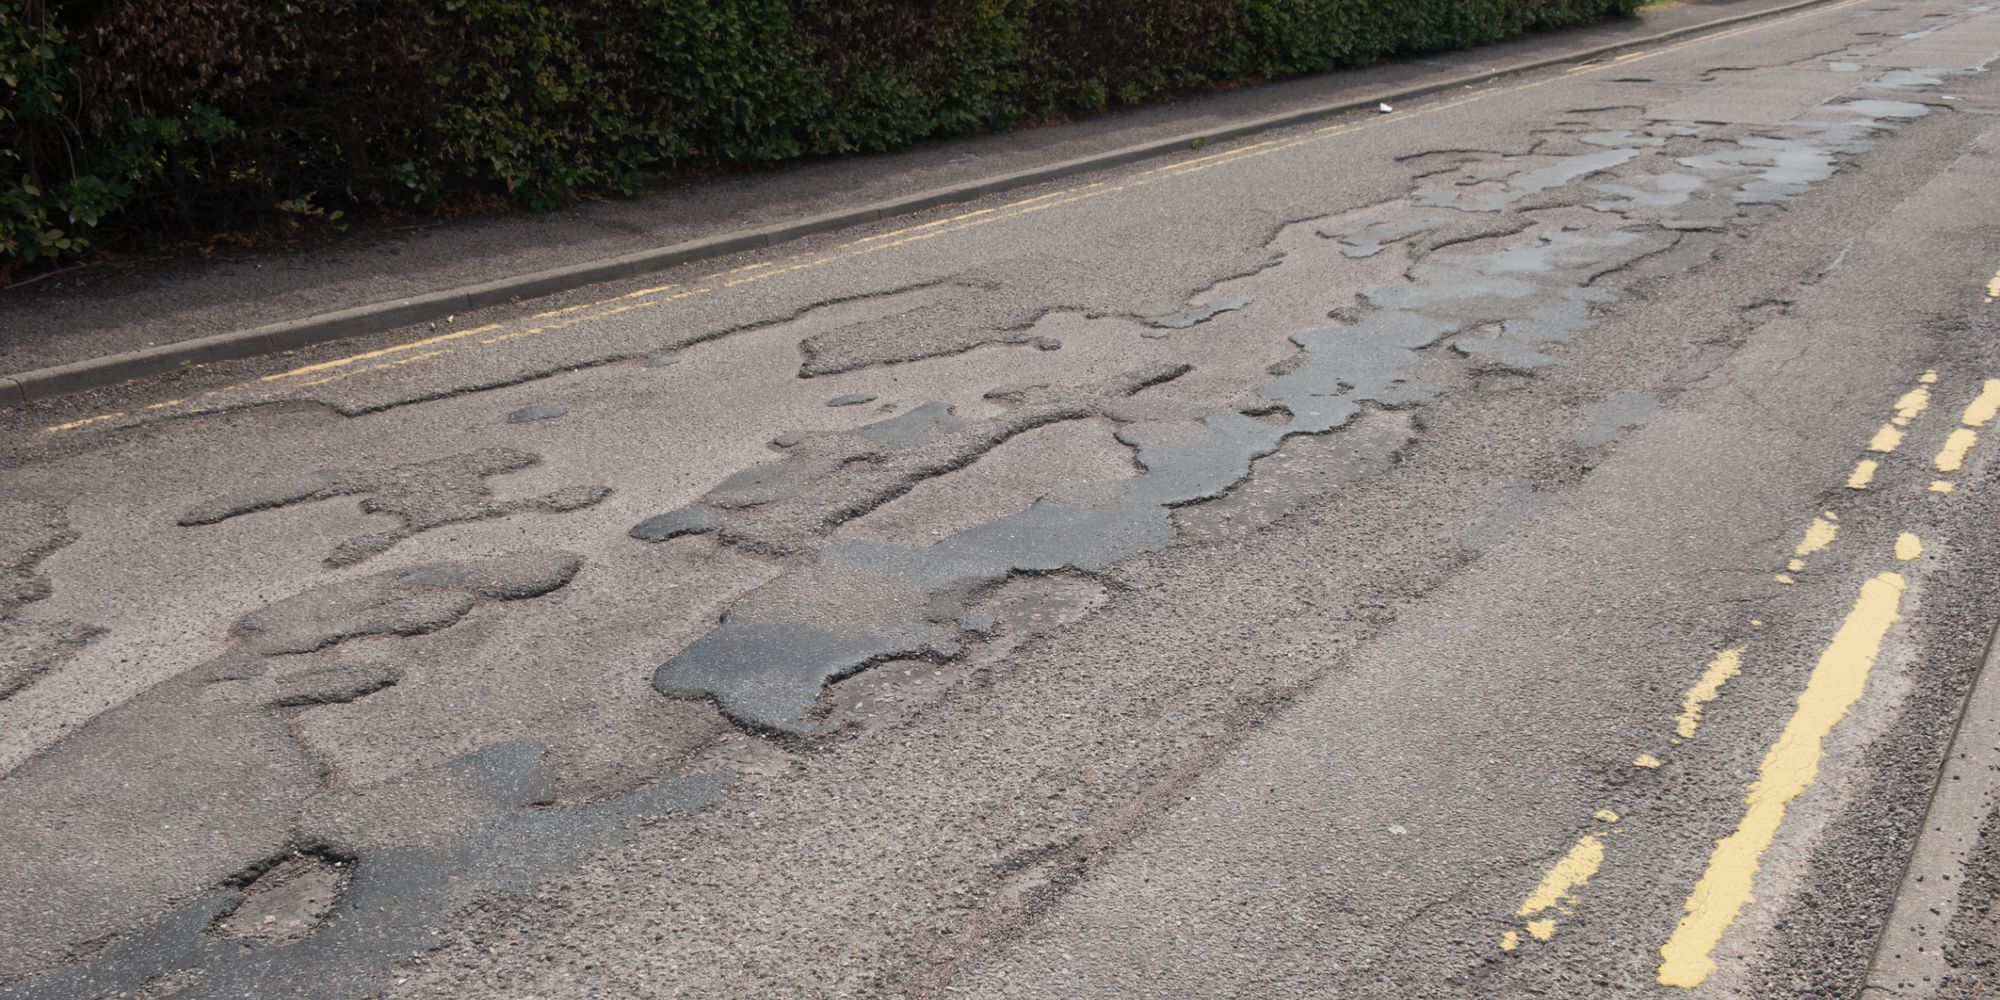 Uneven road surface with potholes